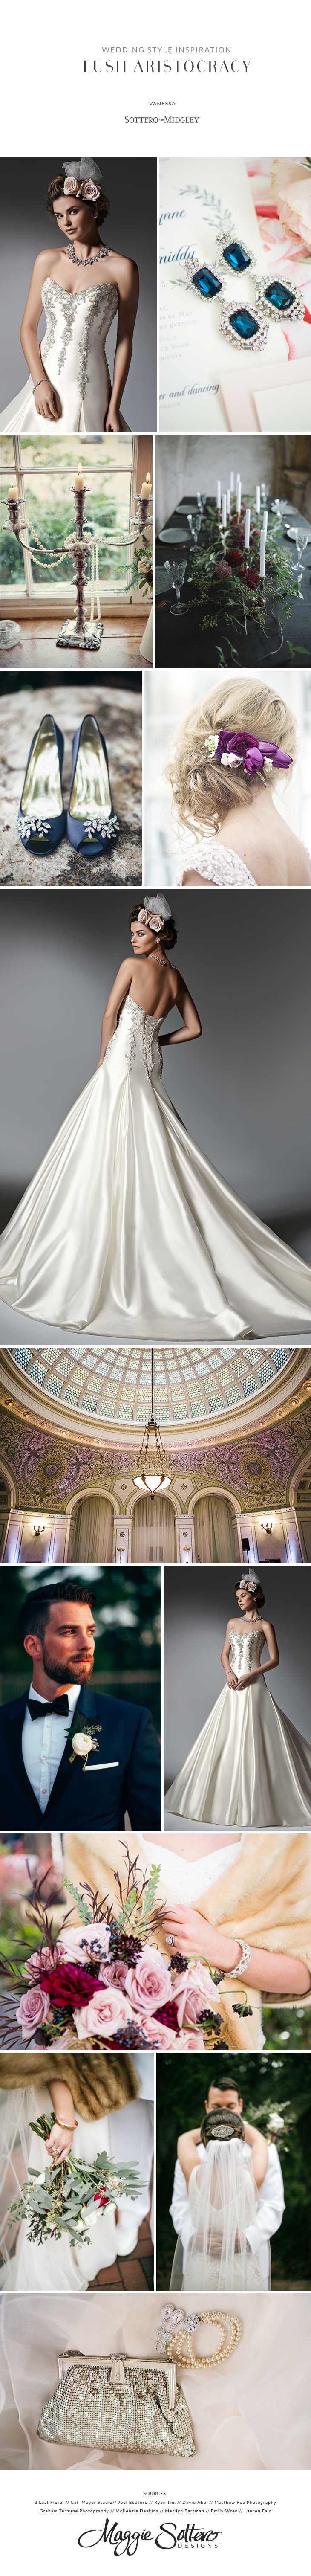 Luxe Romance Anna Karenina-Inspired Wedding Board: Victorian Wedding inspiration featuring Vanessa by Sottero and Midgley